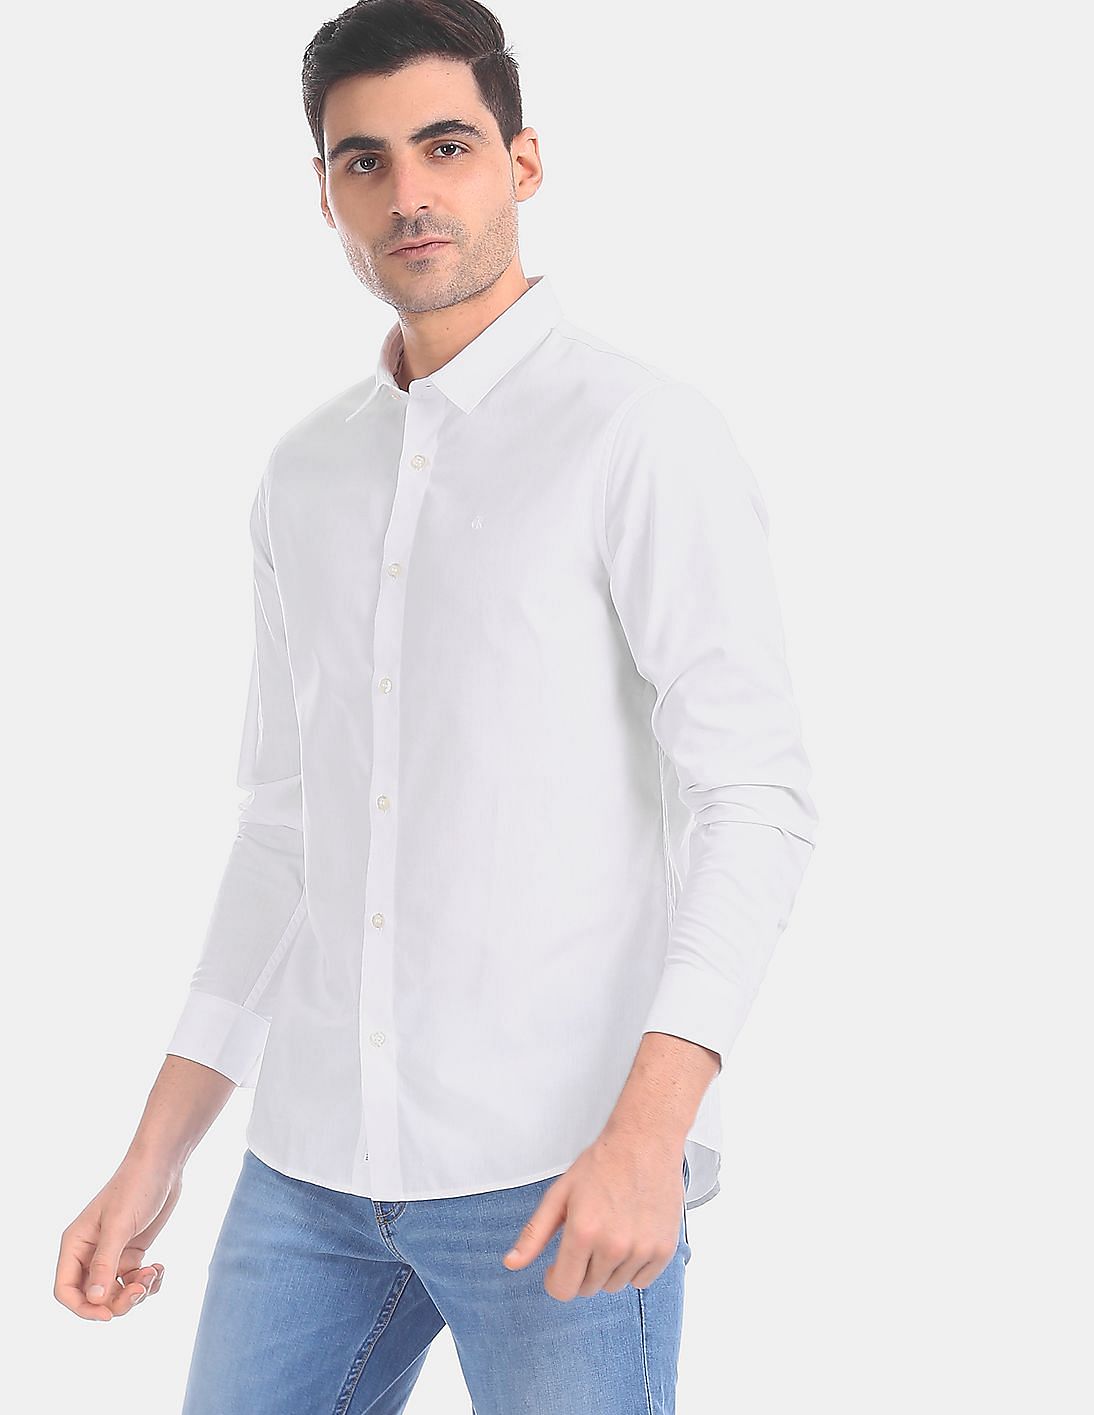 Buy Calvin Klein Men White Slim Fit Solid Casual Shirt - NNNOW.com